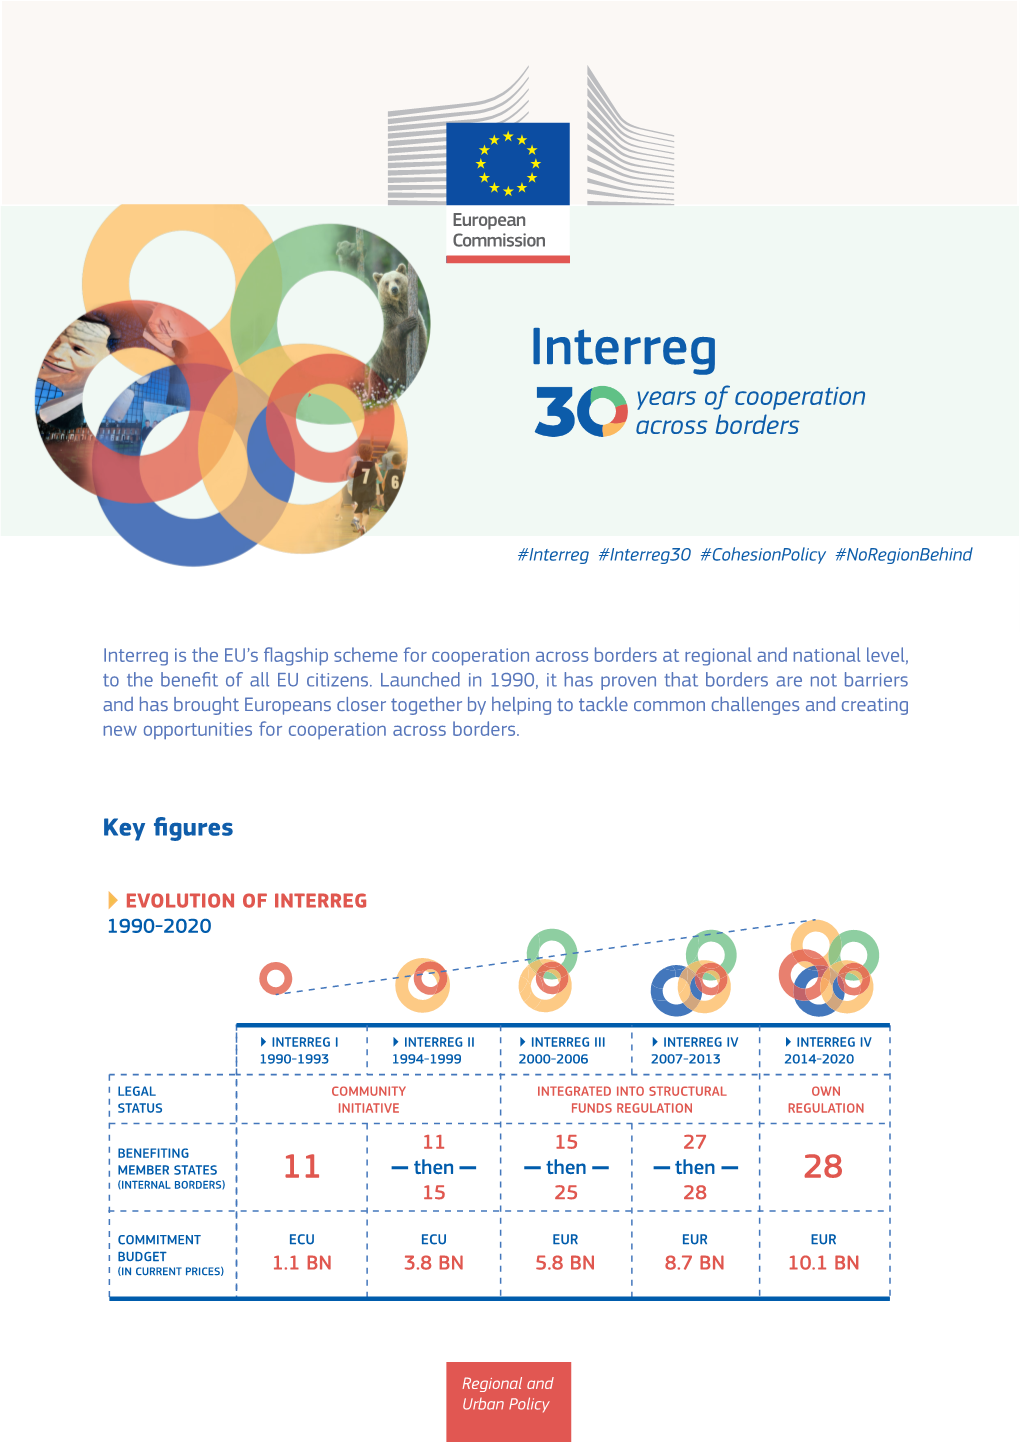 Interreg #Interreg30 #Cohesionpolicy #Noregionbehind